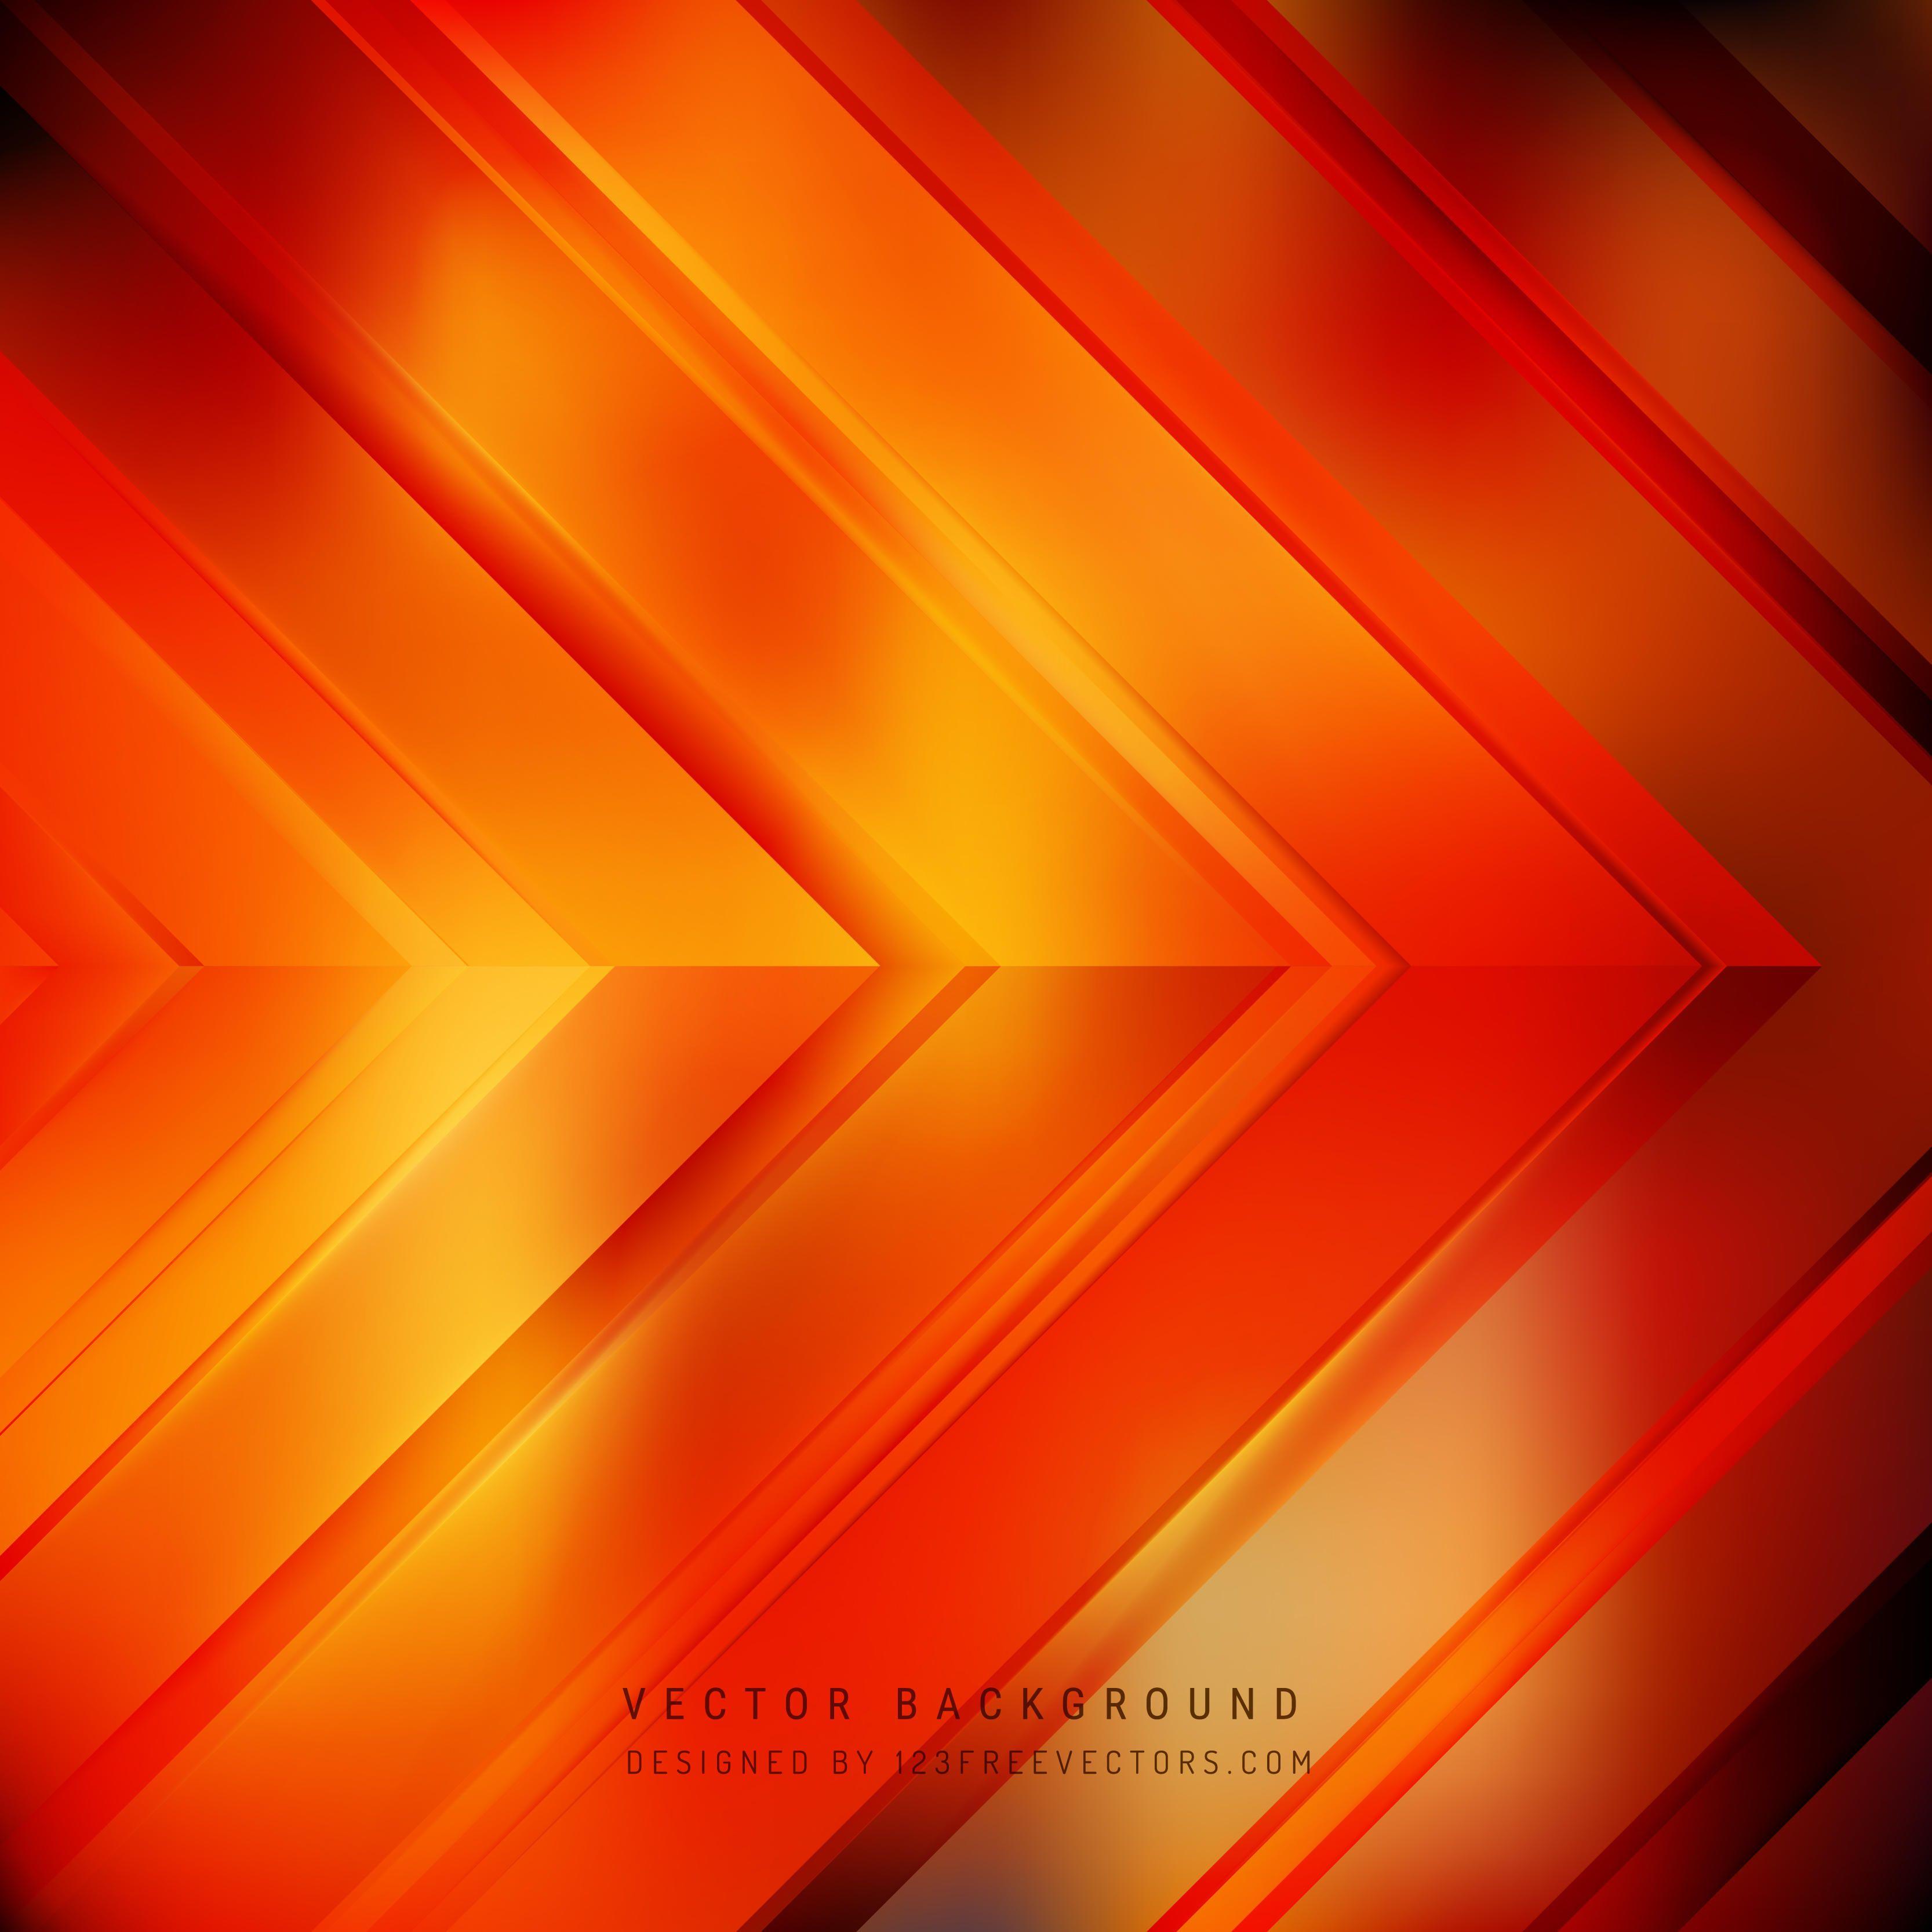 Cool Orange Arrow Background Design